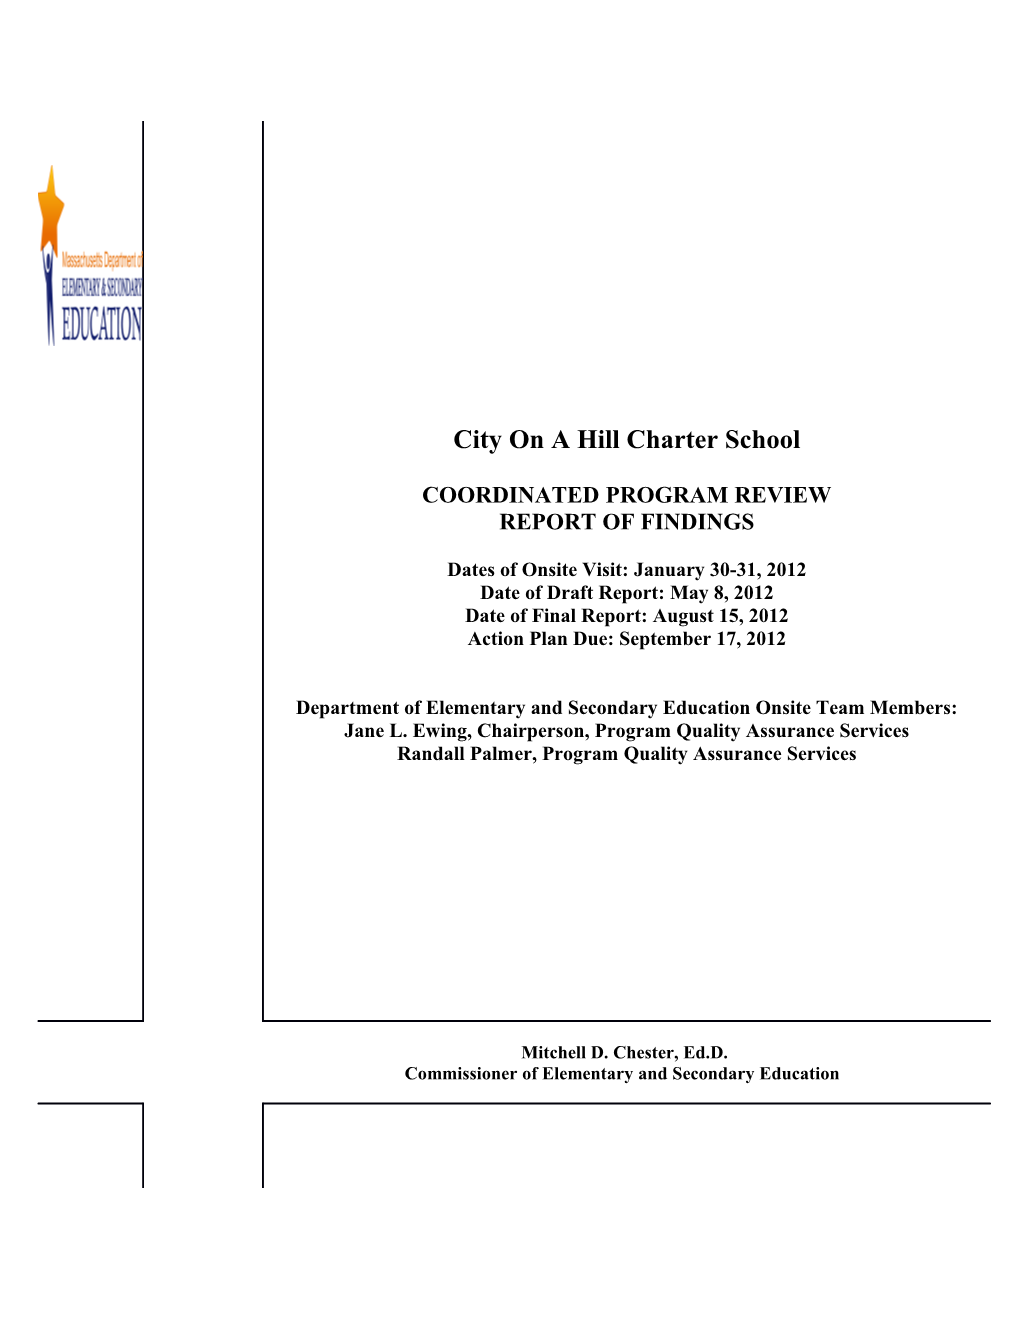 City on a Hill Charter School Final Report 2012